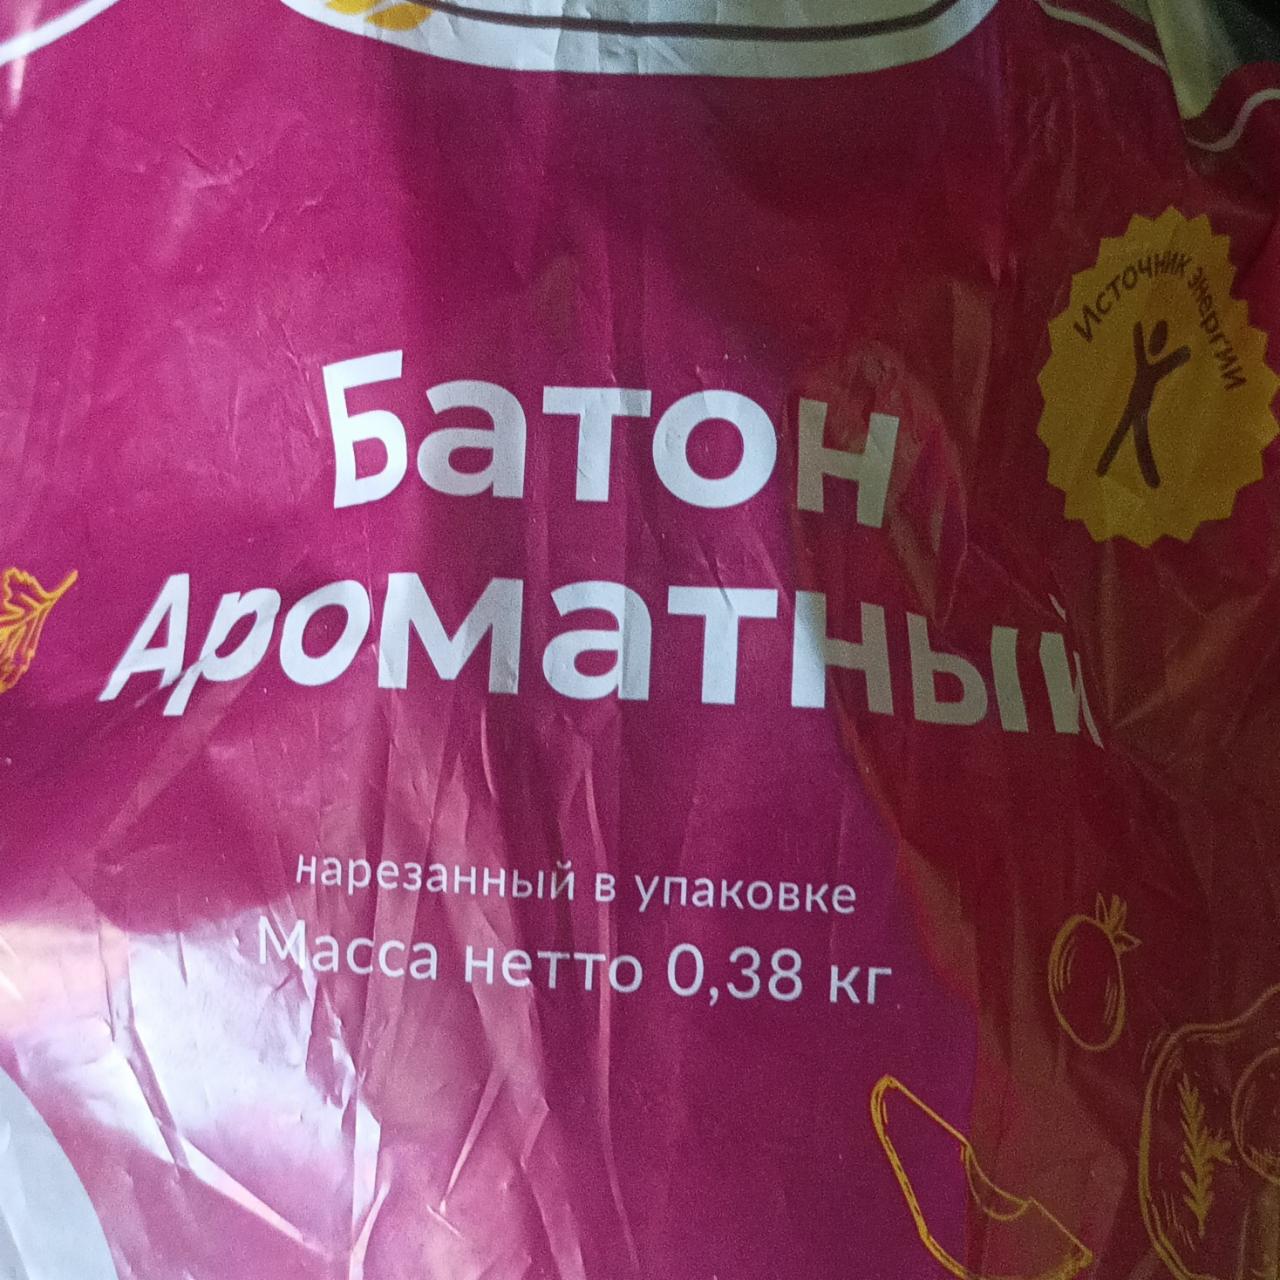 Фото - батон ароматный Русский хлеб